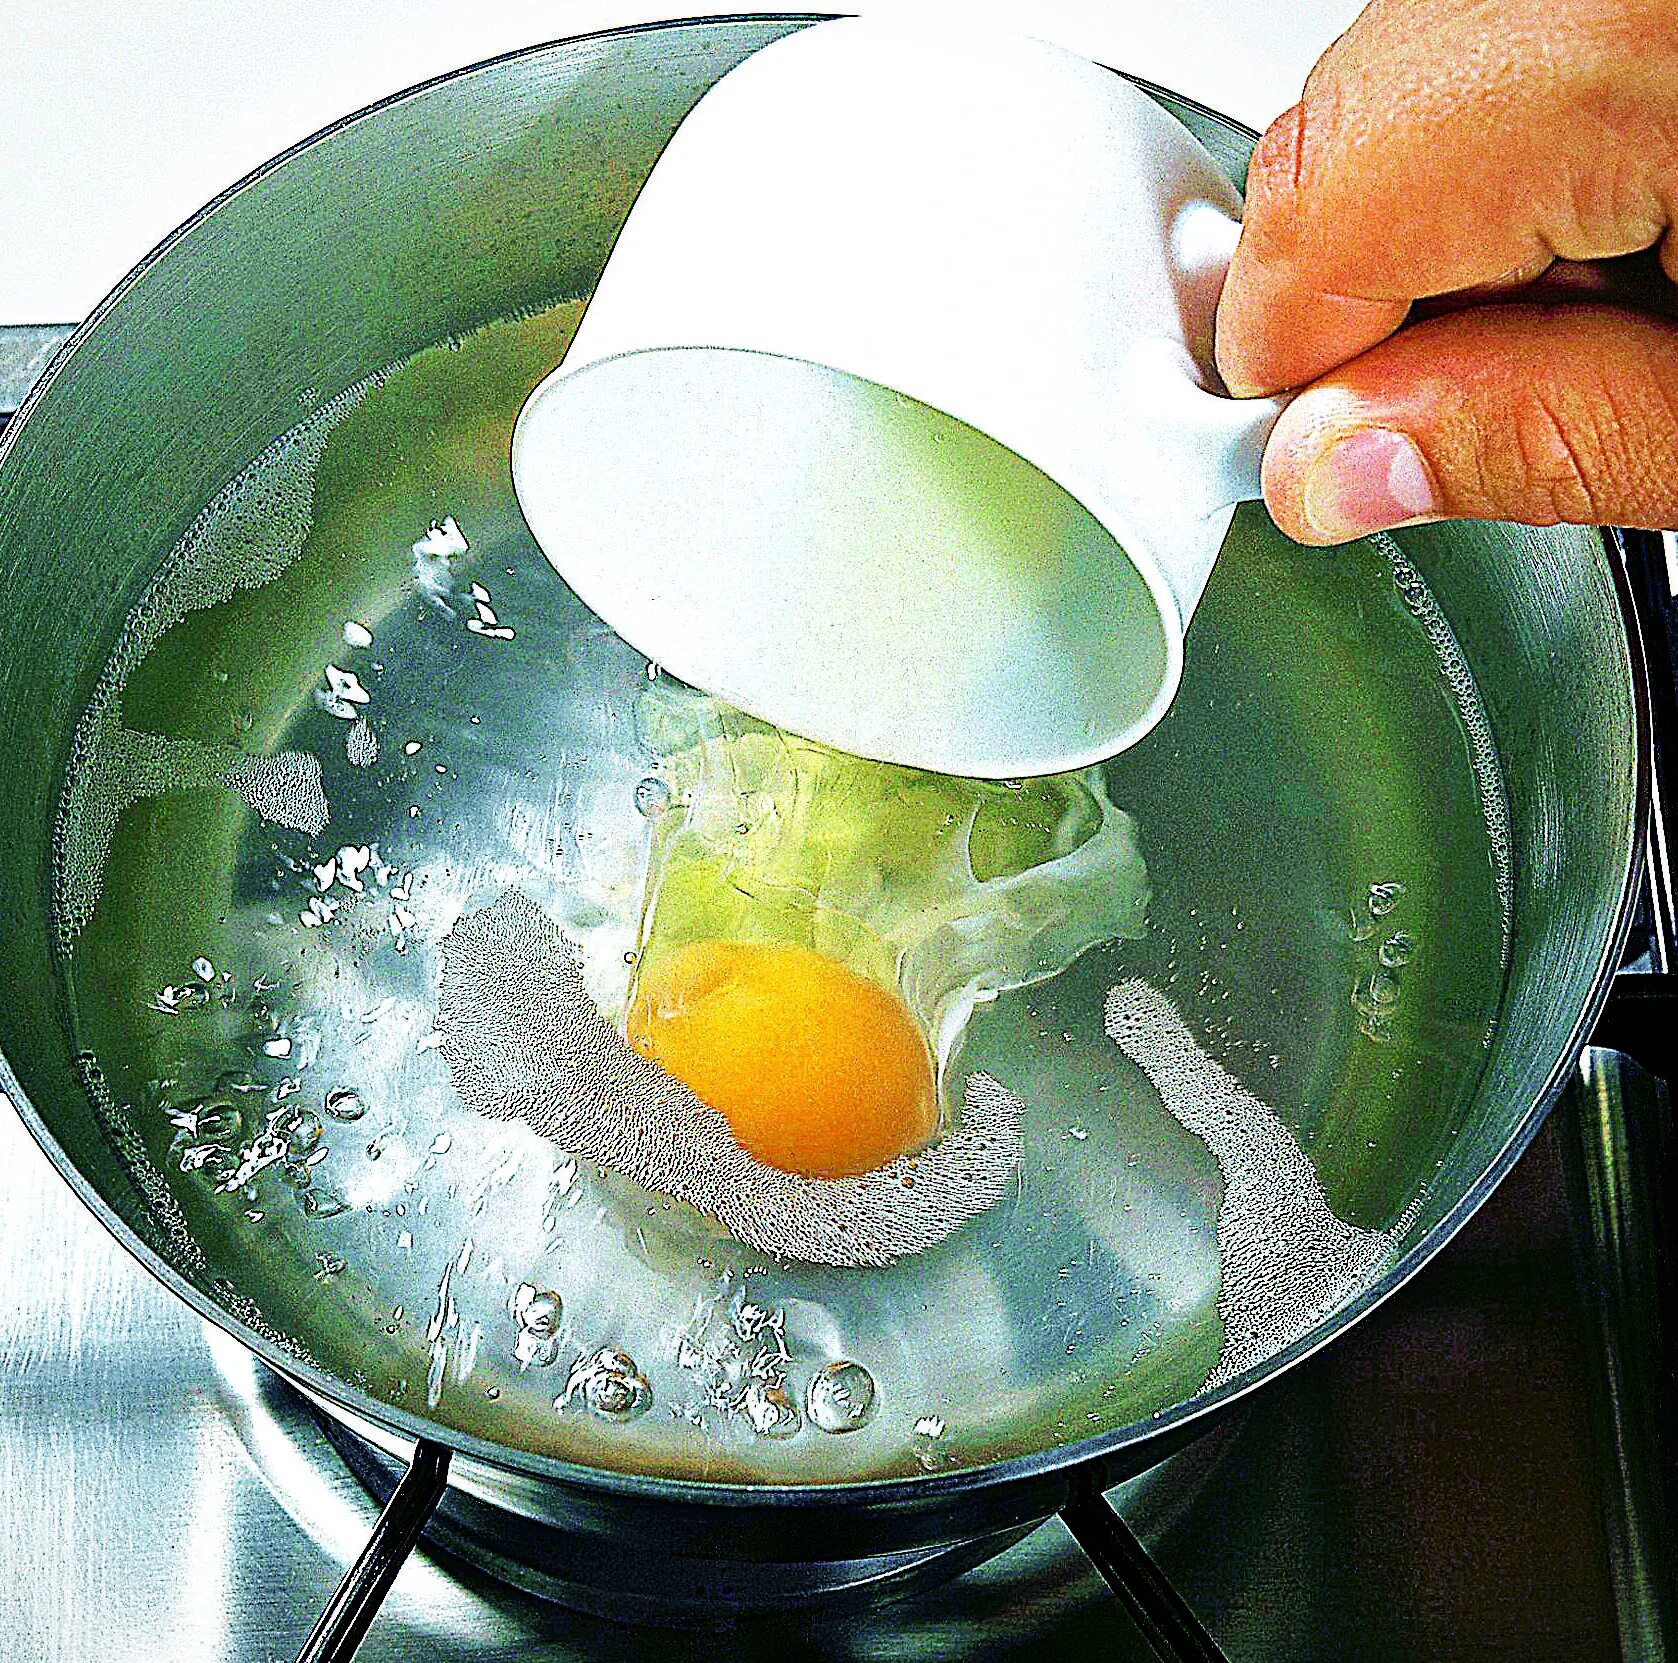 Яйцо пашот в мешочке. Варка яиц пашот. Яйцо пашот в кипящую воду. Яйцо пашот в кастрюле. Яйцо пашот в домашних условиях видео